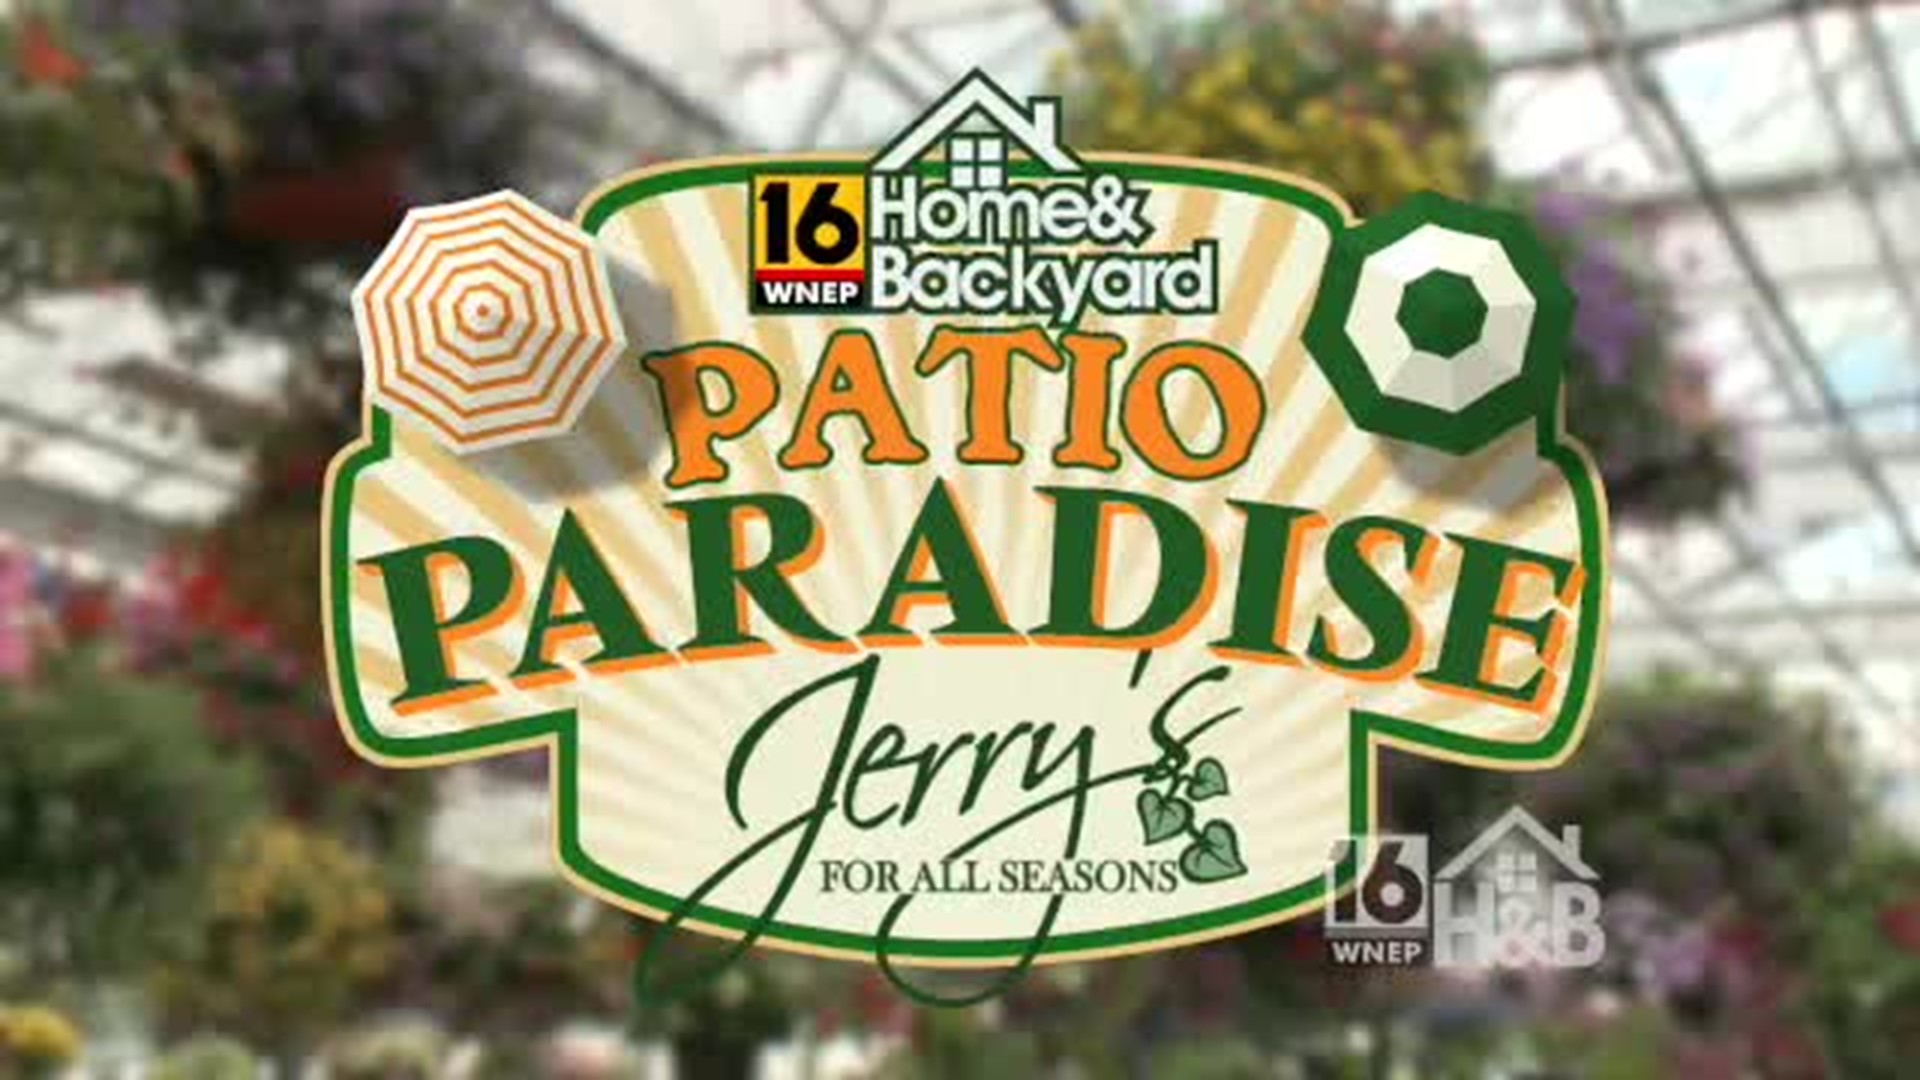 2017 Patio Paradise Prizes